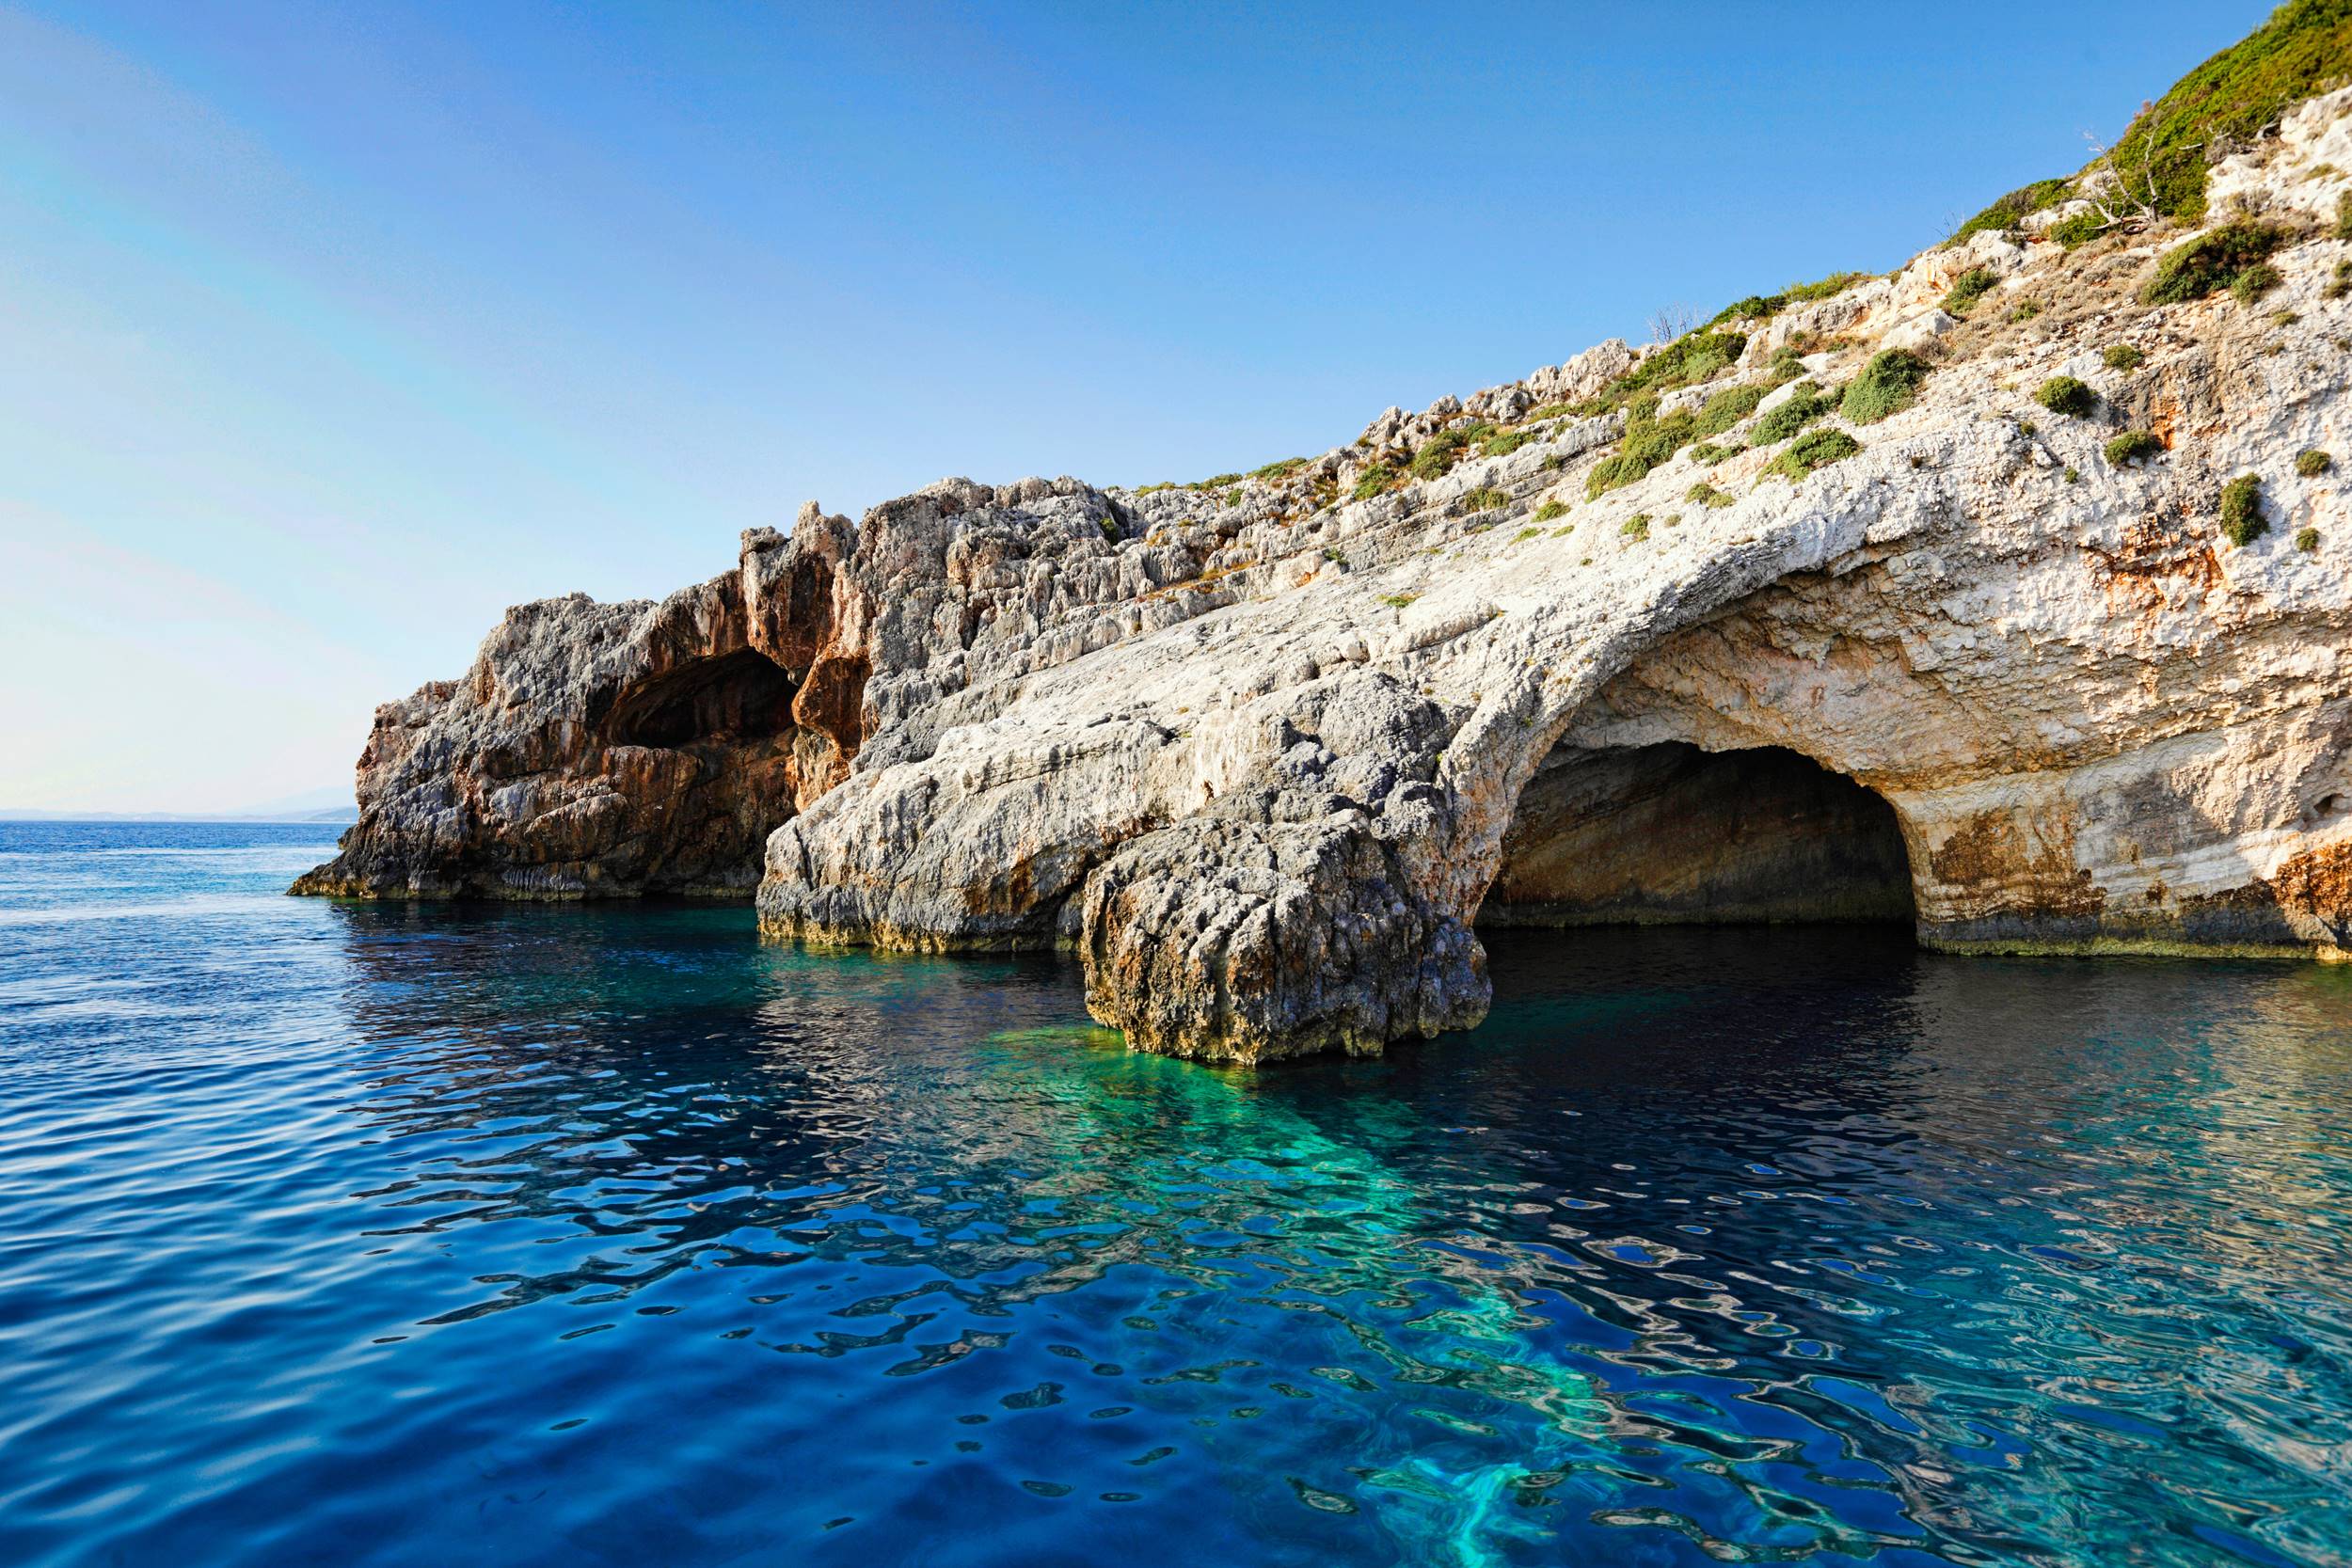 Zakynthos Blue Caves: A Mesmerizing Underwater World